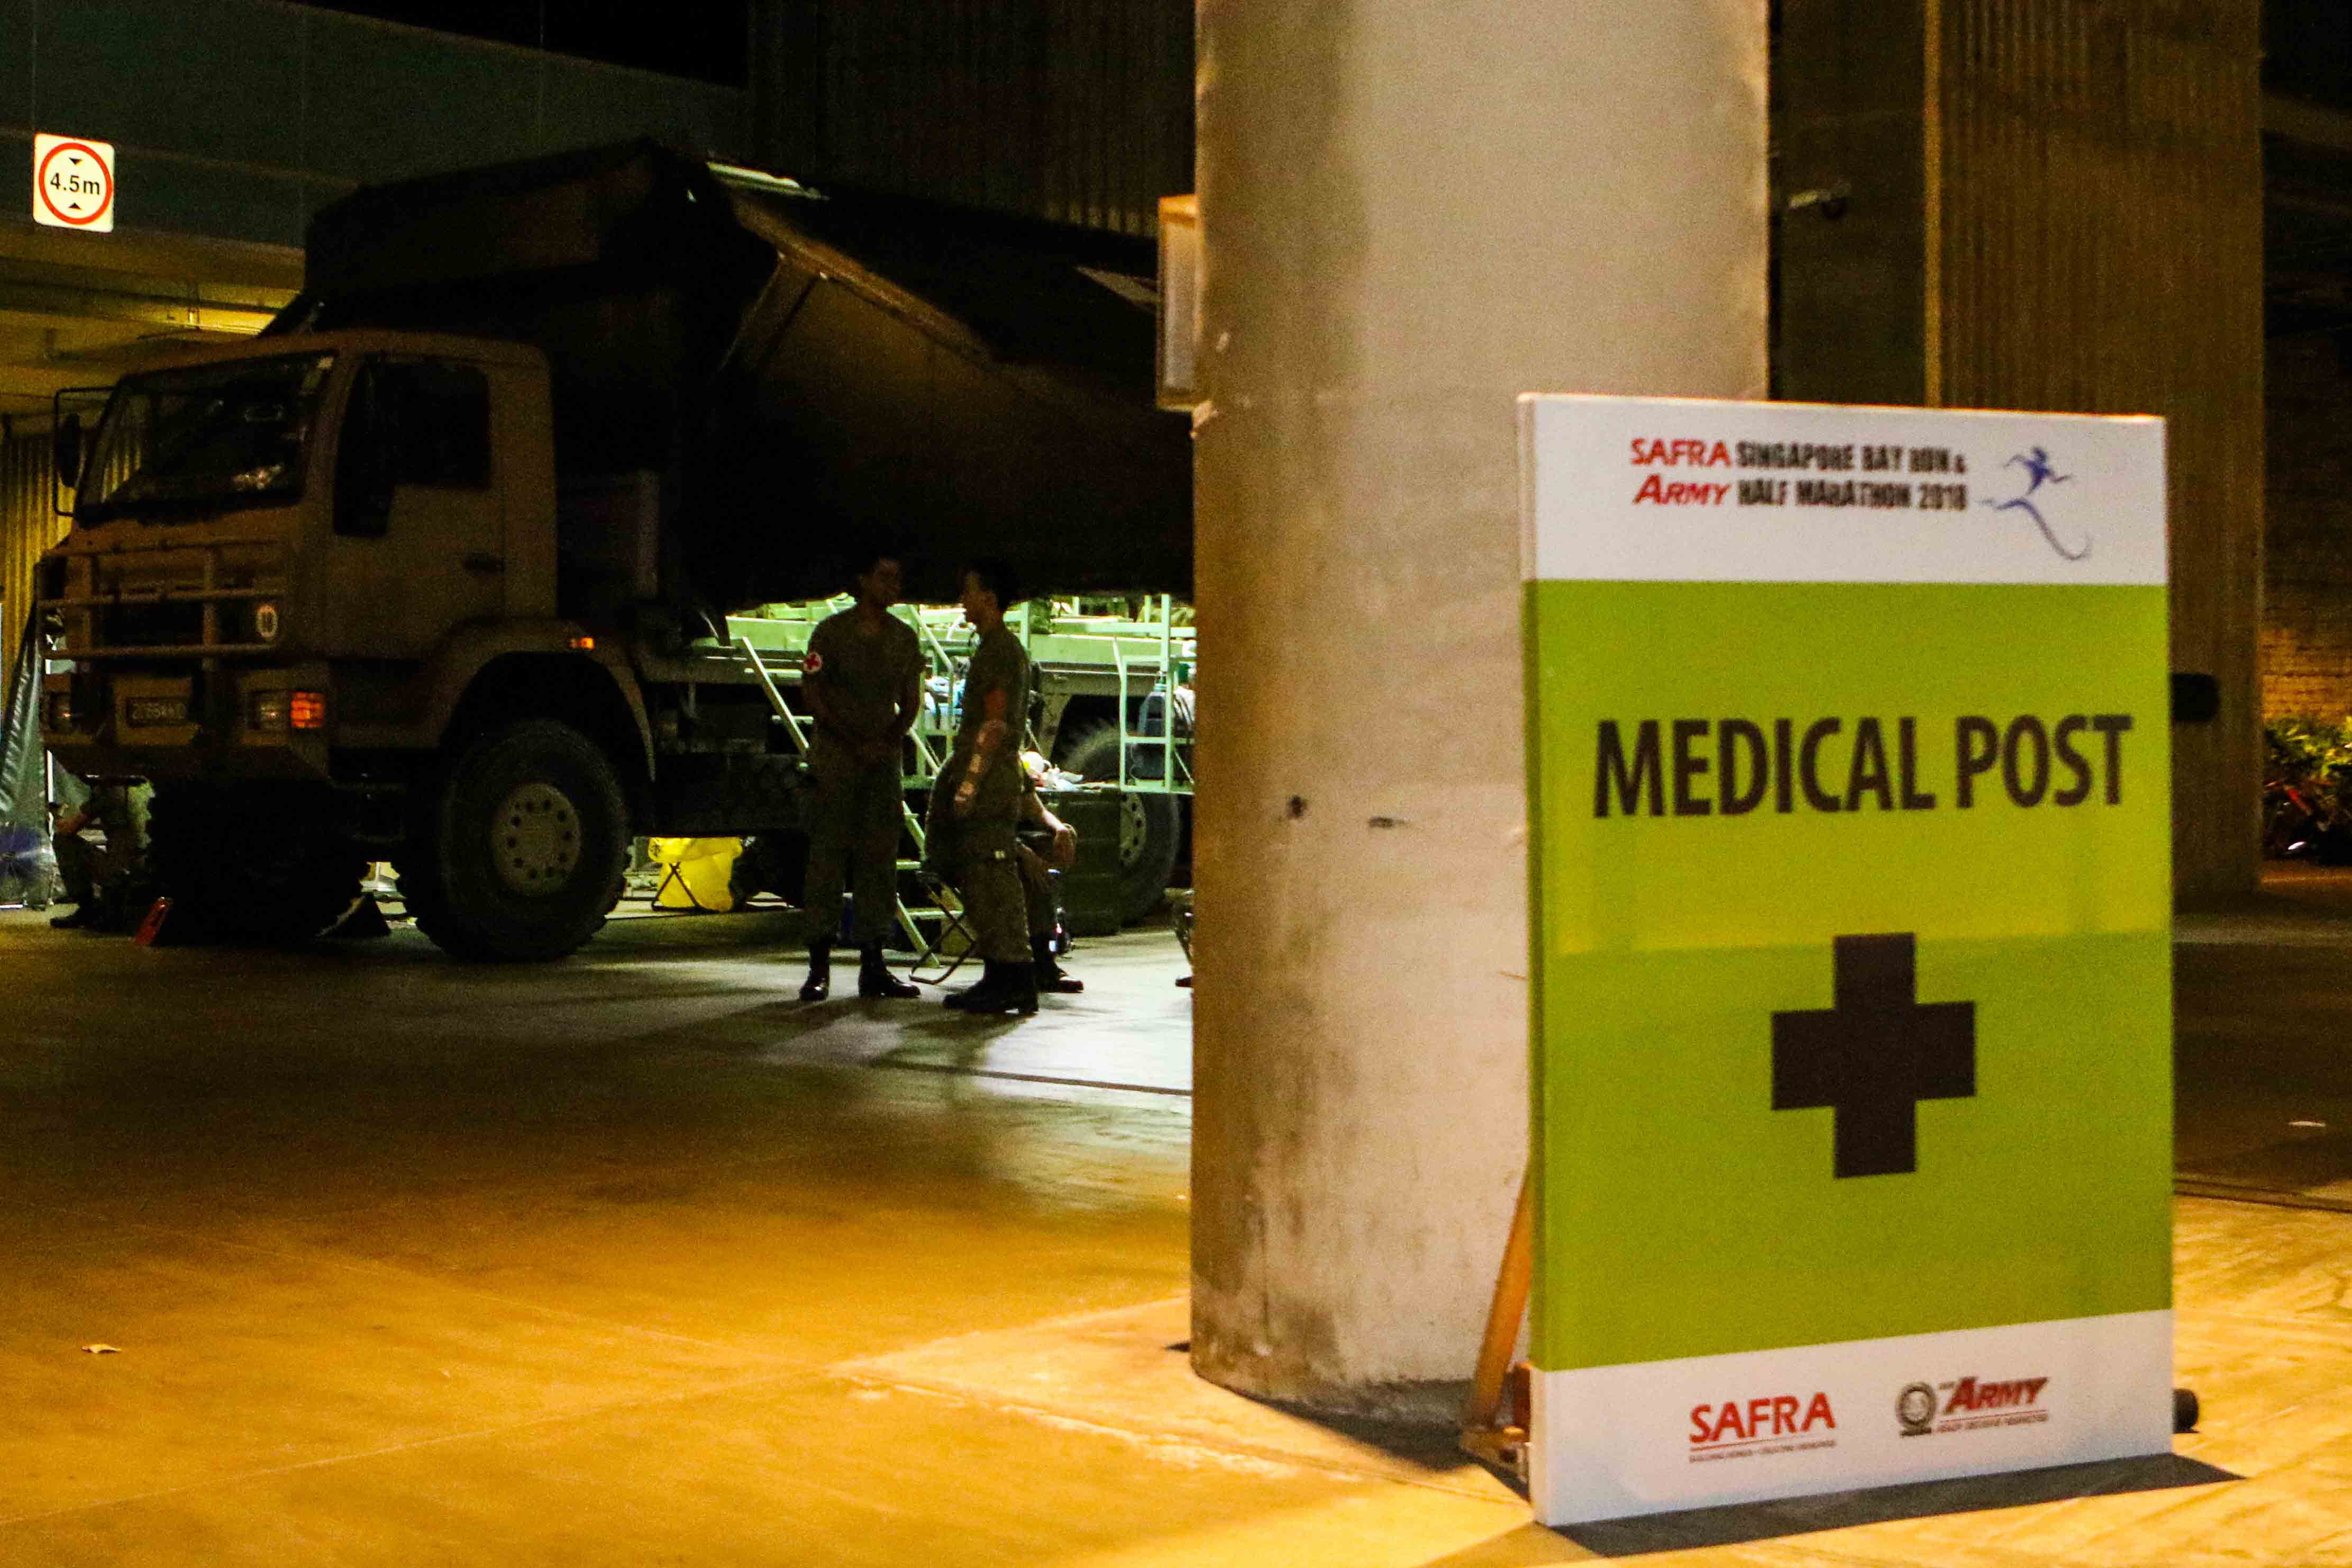 Medical Post stationed at Marina Barrage.